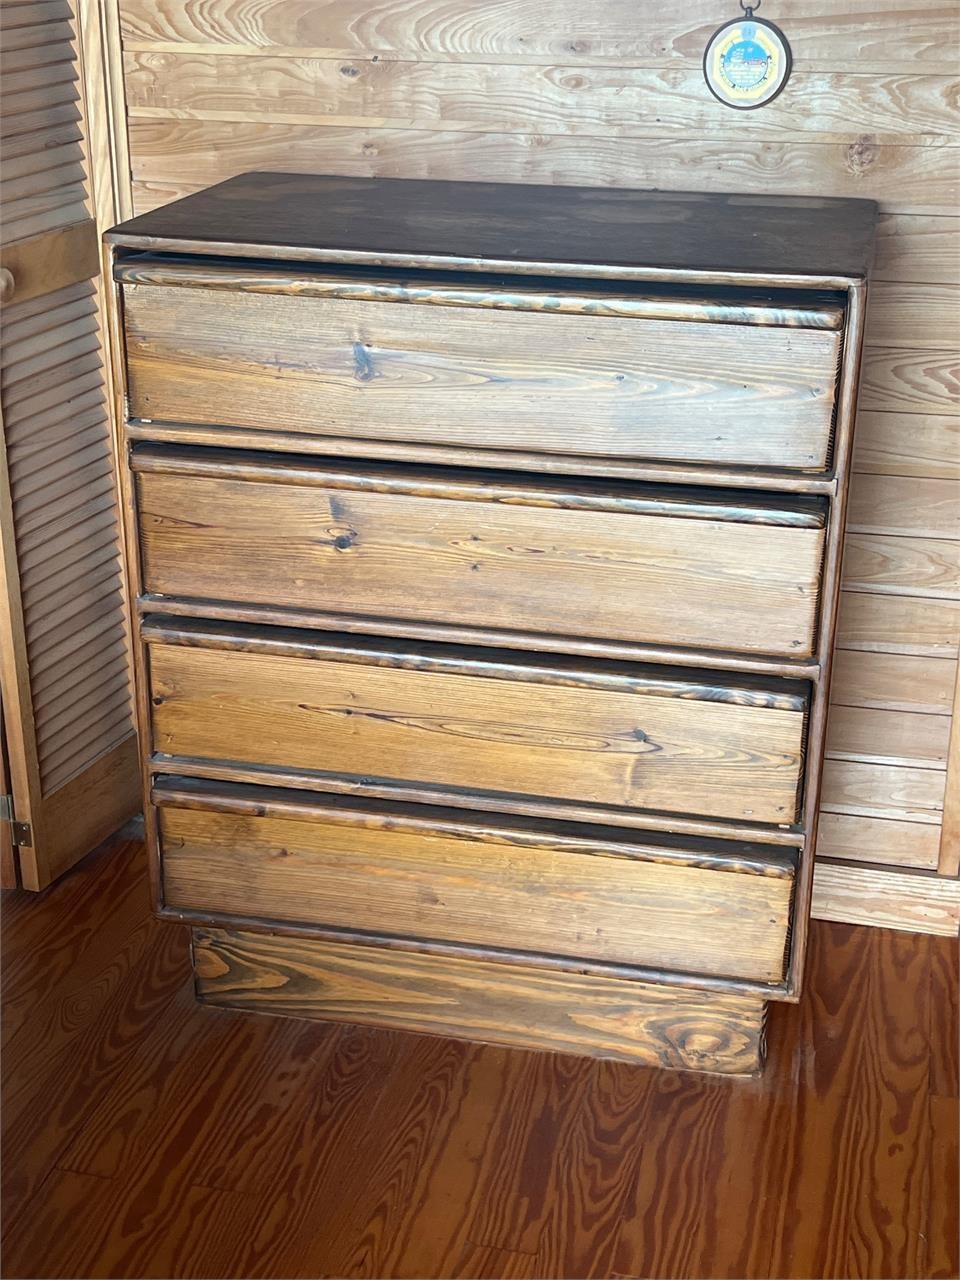 Vintage Wooden chest 2nd floor